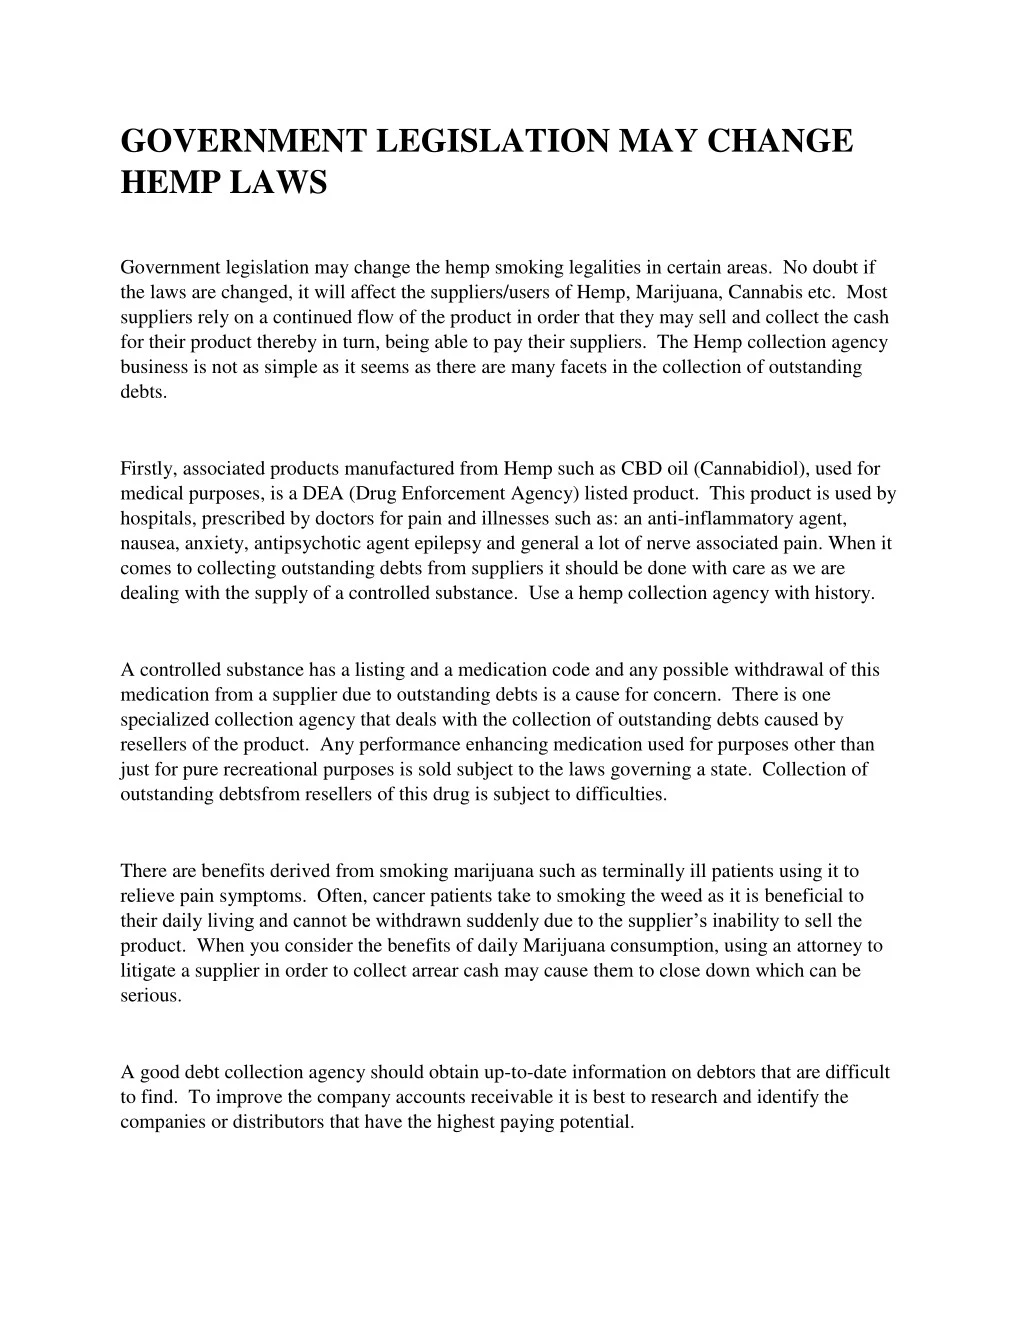 government legislation may change hemp laws